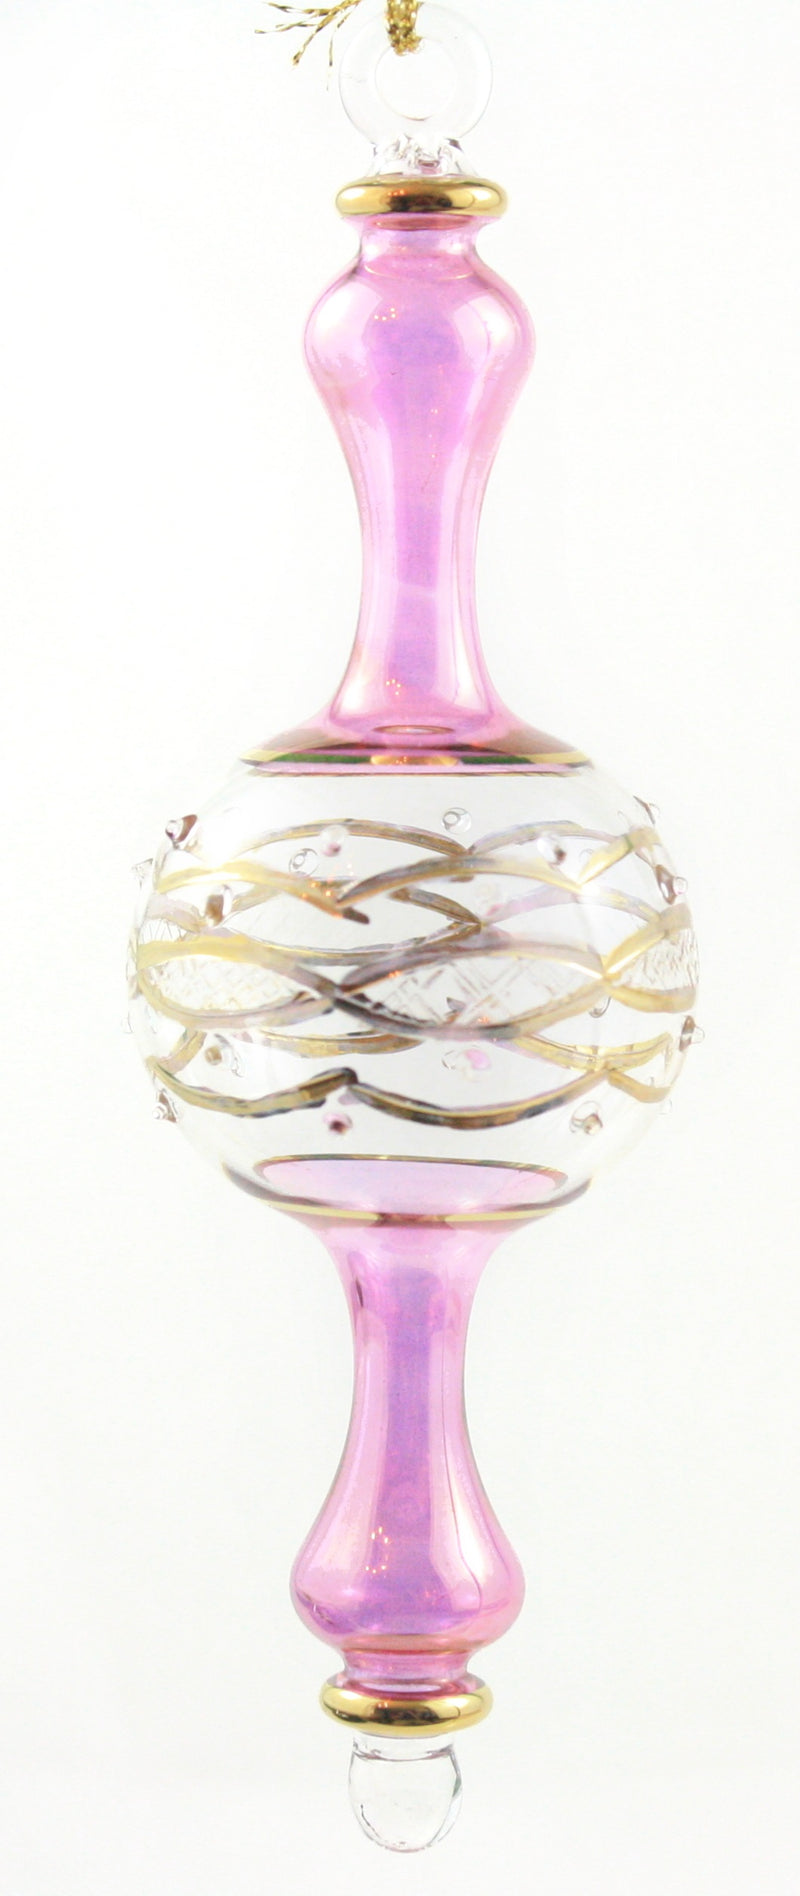 Elegant Gold Etched Glass Rattle Ornament - Purple